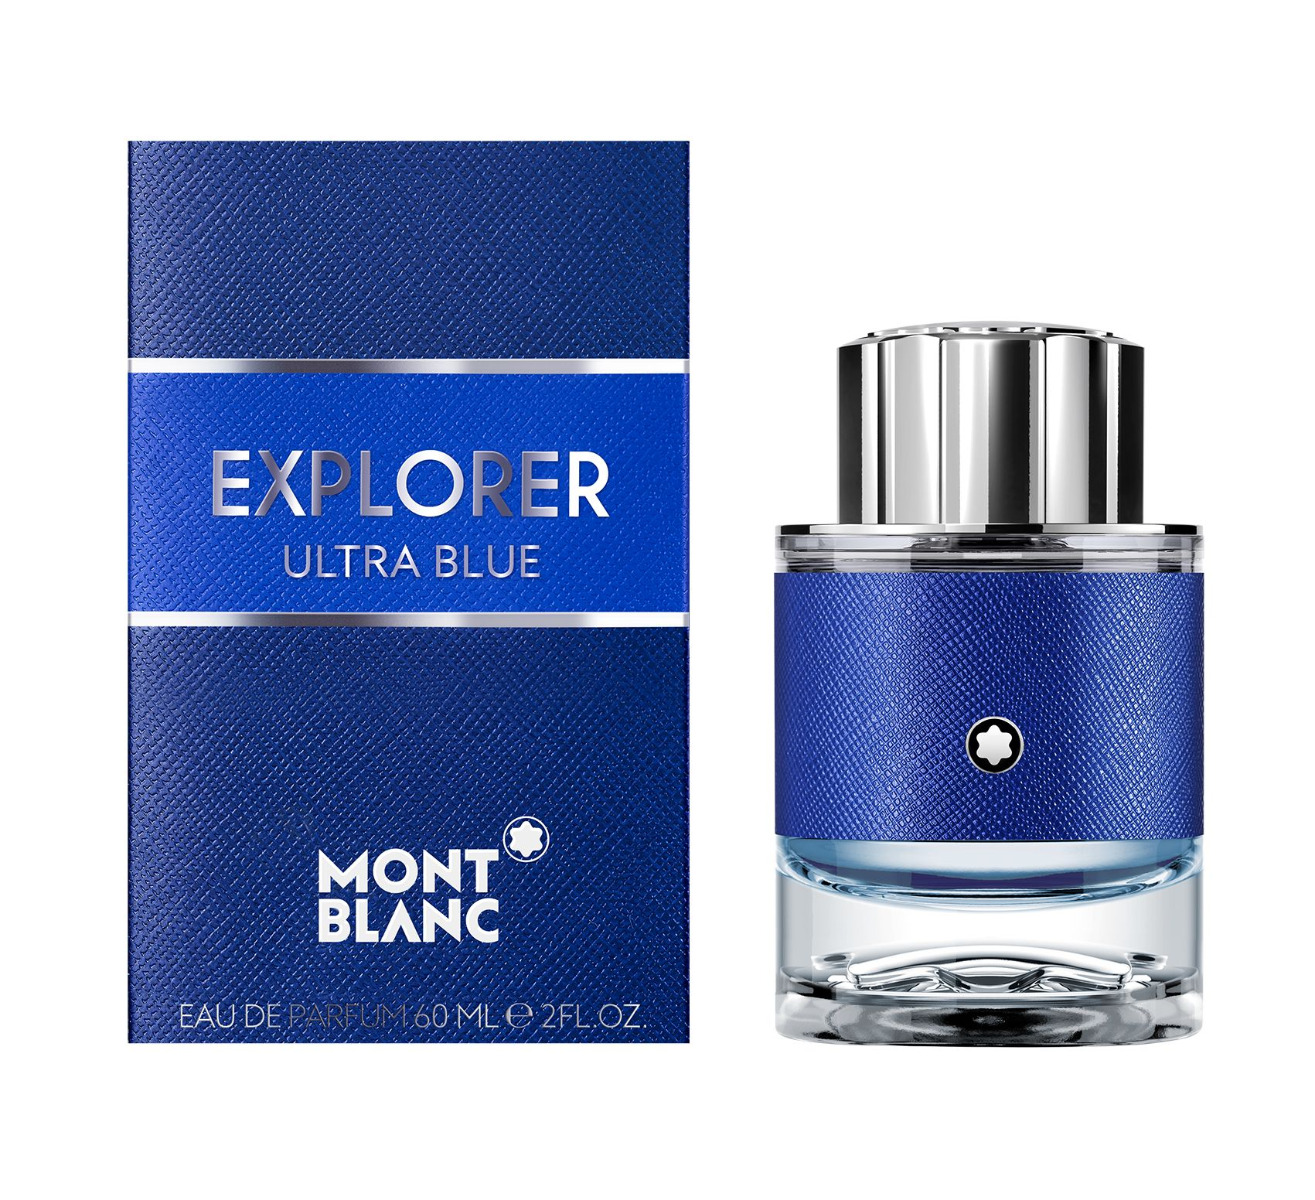 MONTBLANC EXPLORER ULTRA BLUE EdP 60 ml MONTBLANC